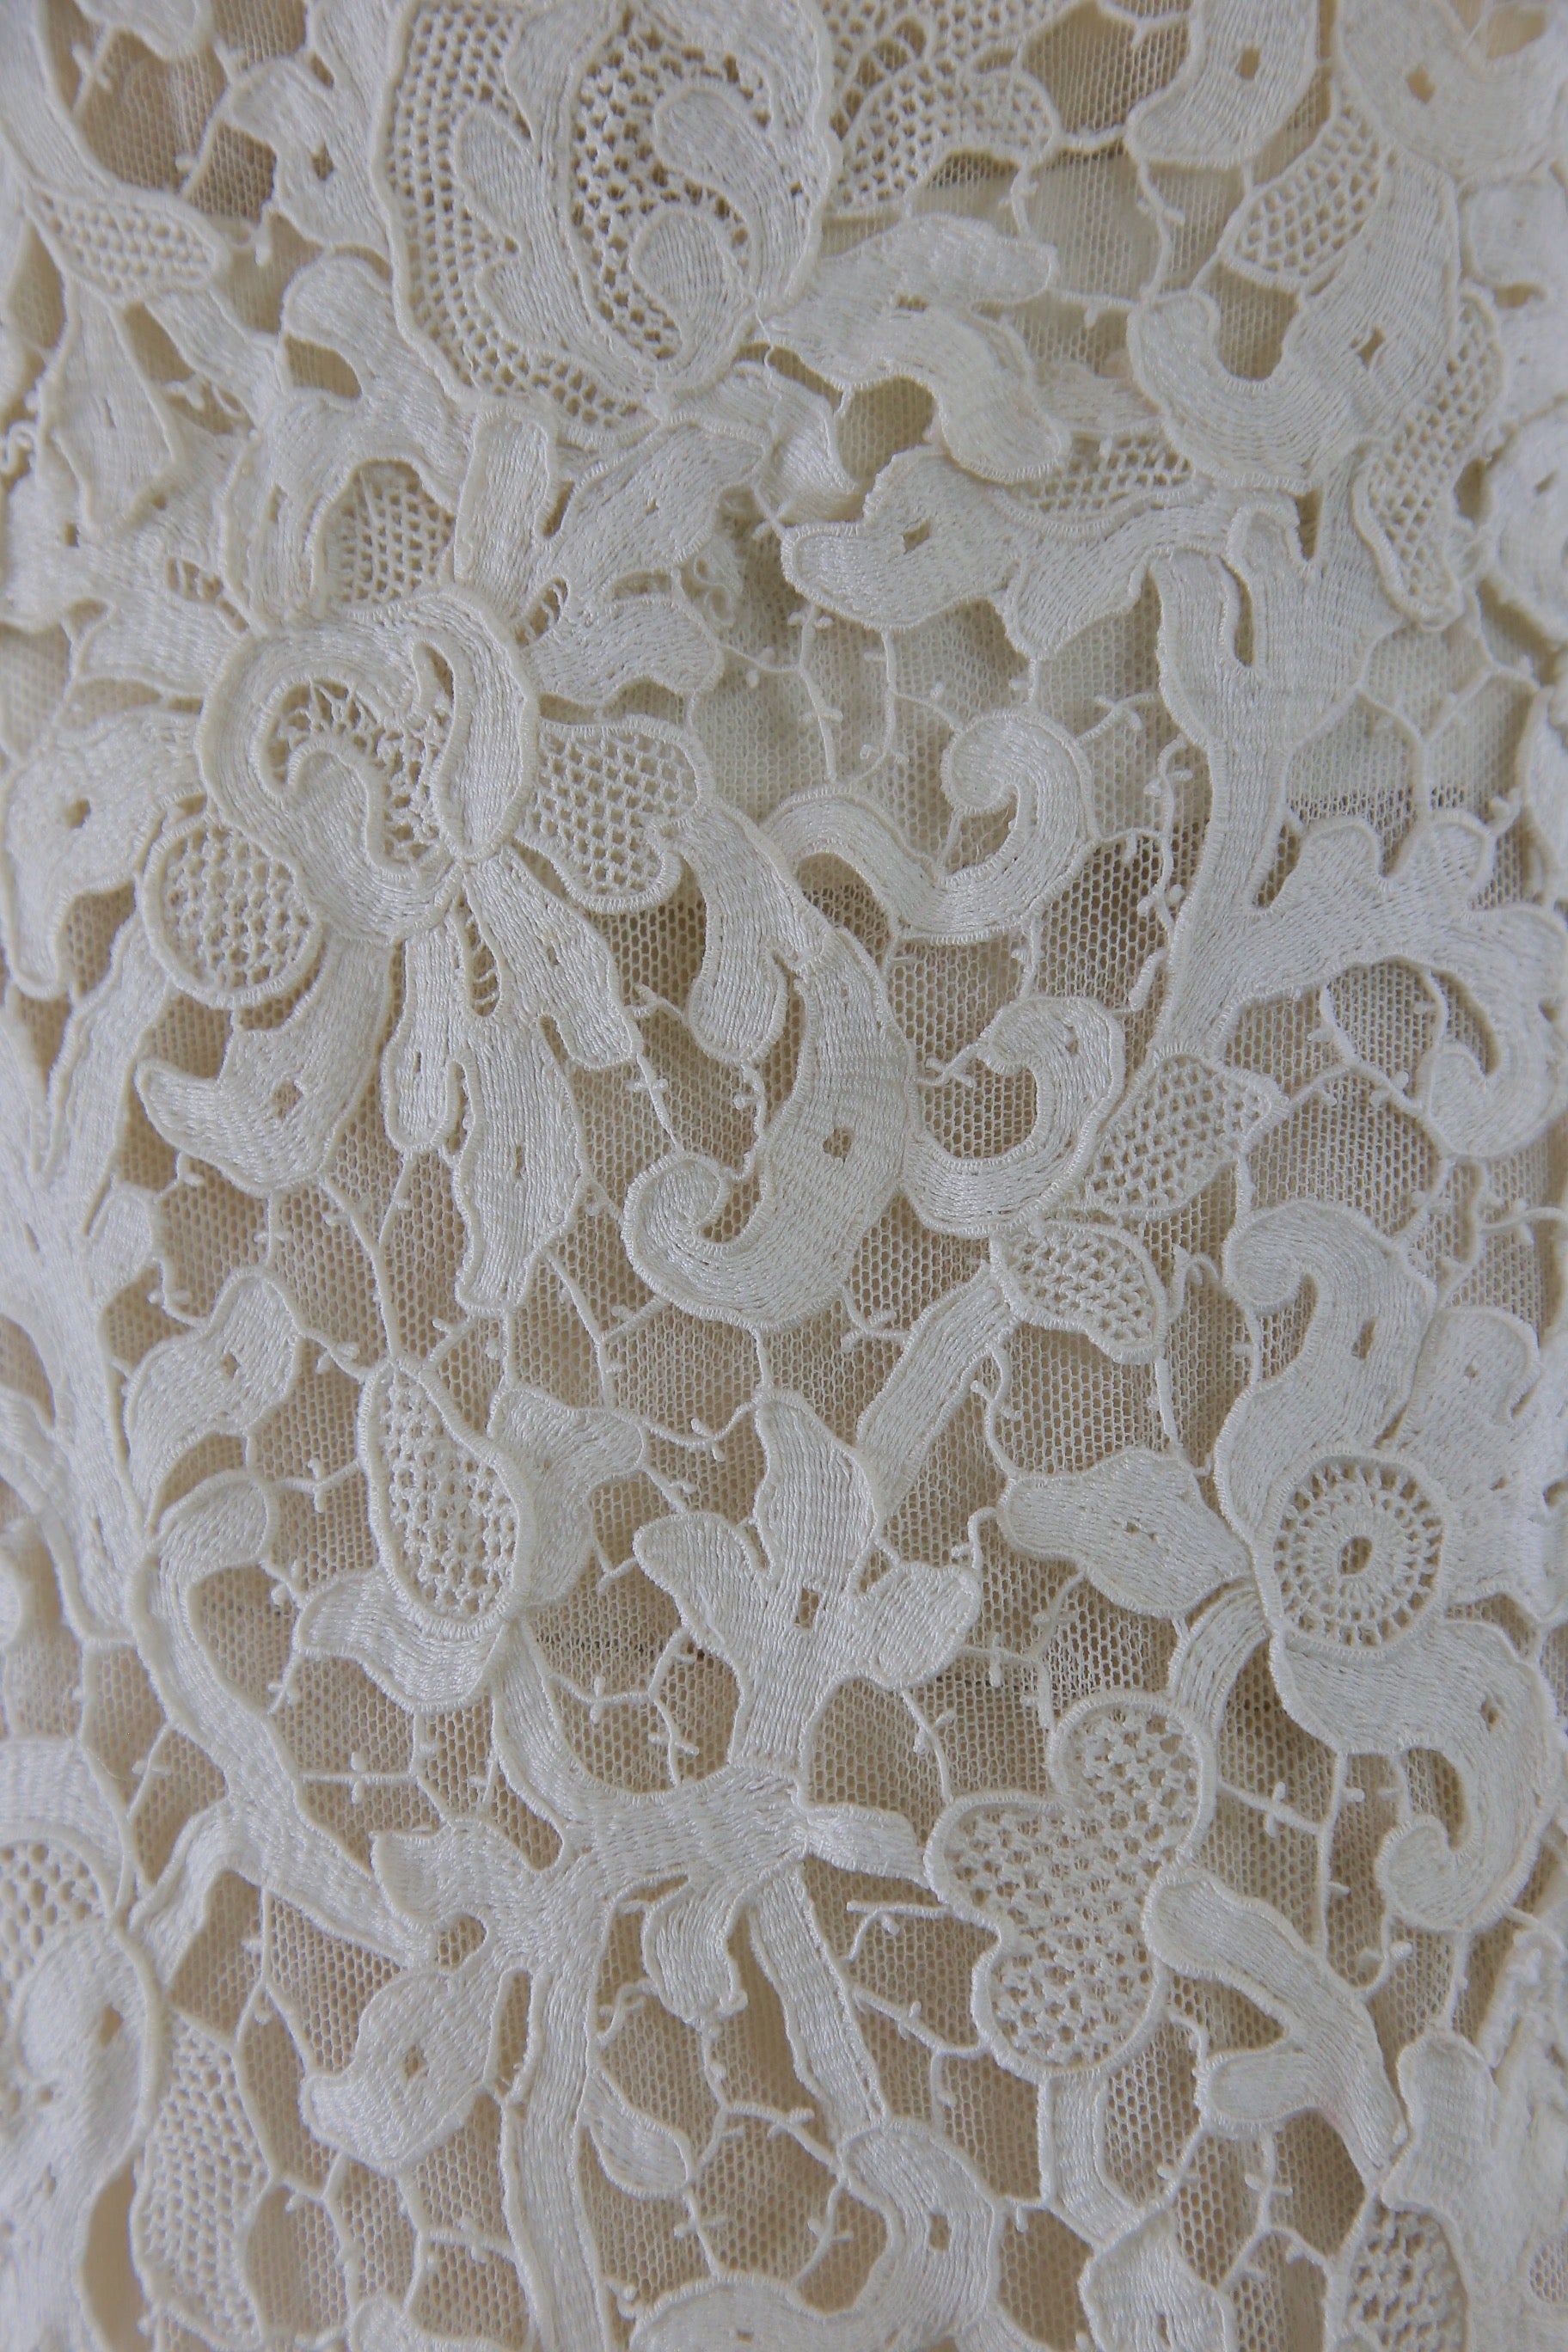 Vintage 20s Italian gros point lace wedding dress